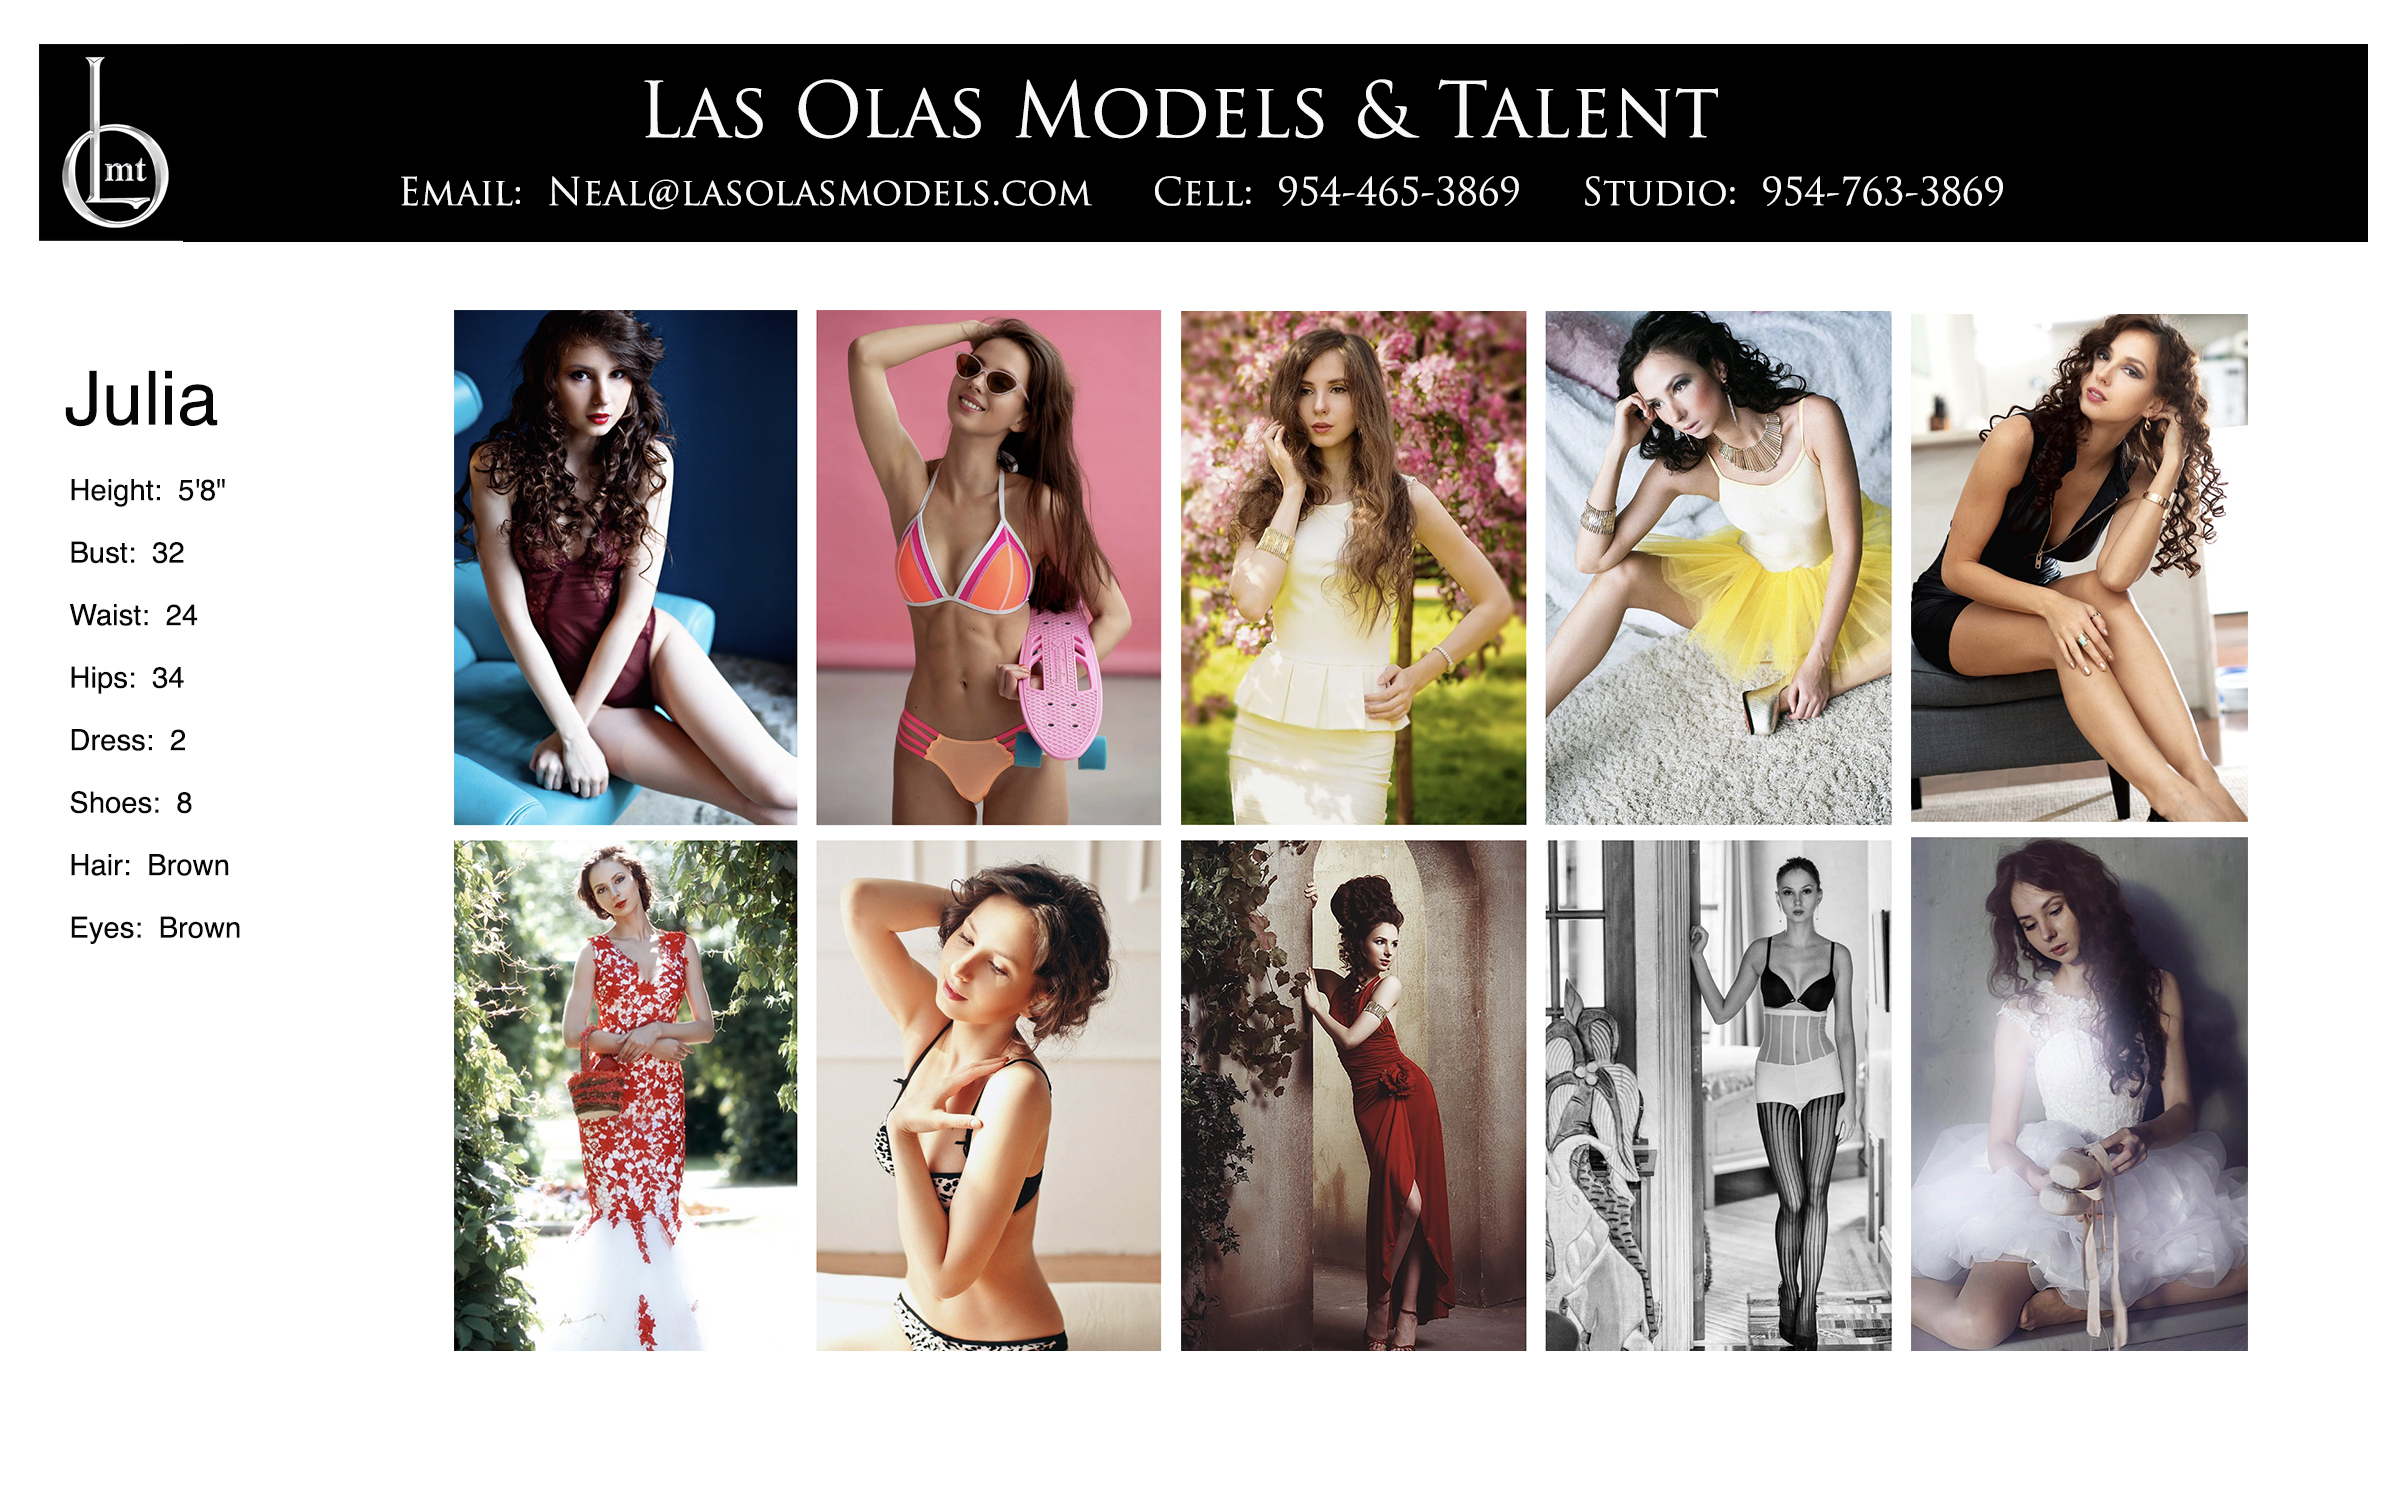 Models Fort Lauderdale Miami South Florida - Print Video Commercial Catalog - Las Olas Models & Talent - Julia Comp